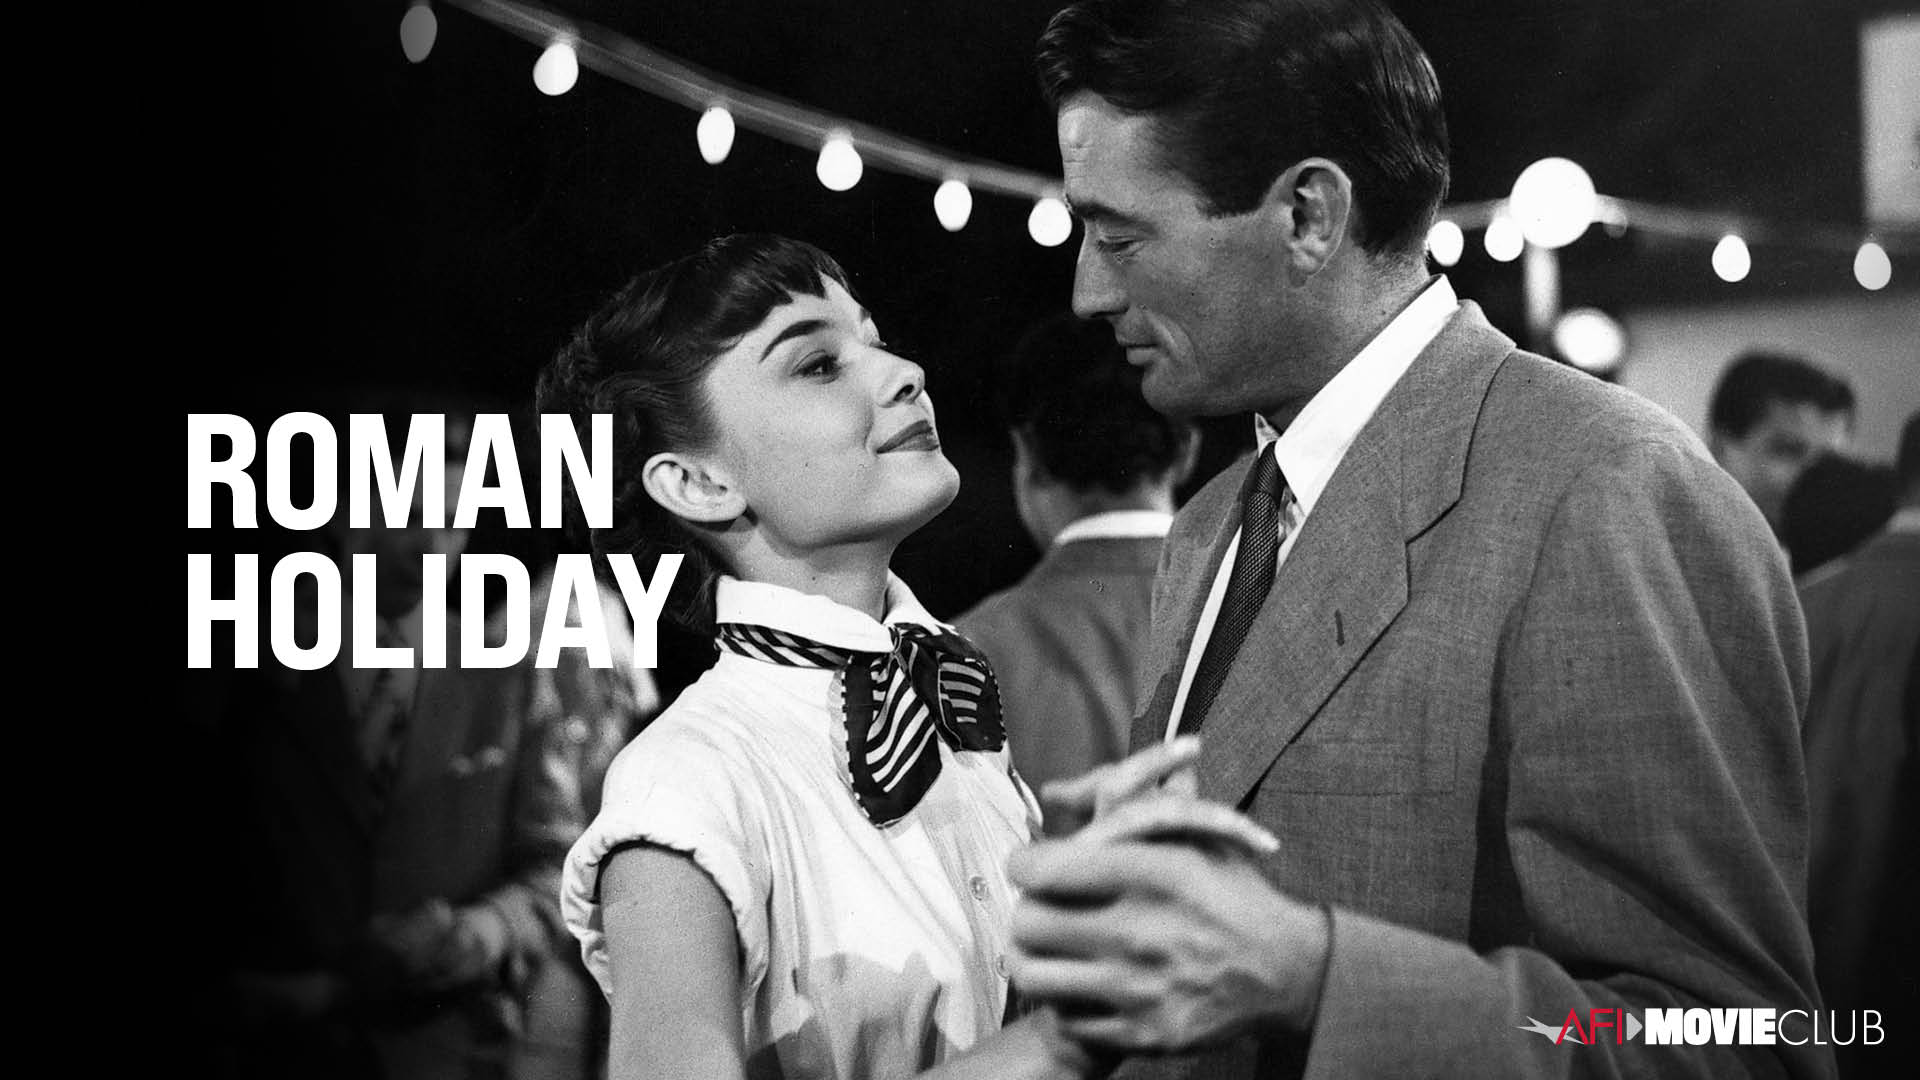 Roman Holiday Film Still - Audrey Hepburn and Gregory Peck